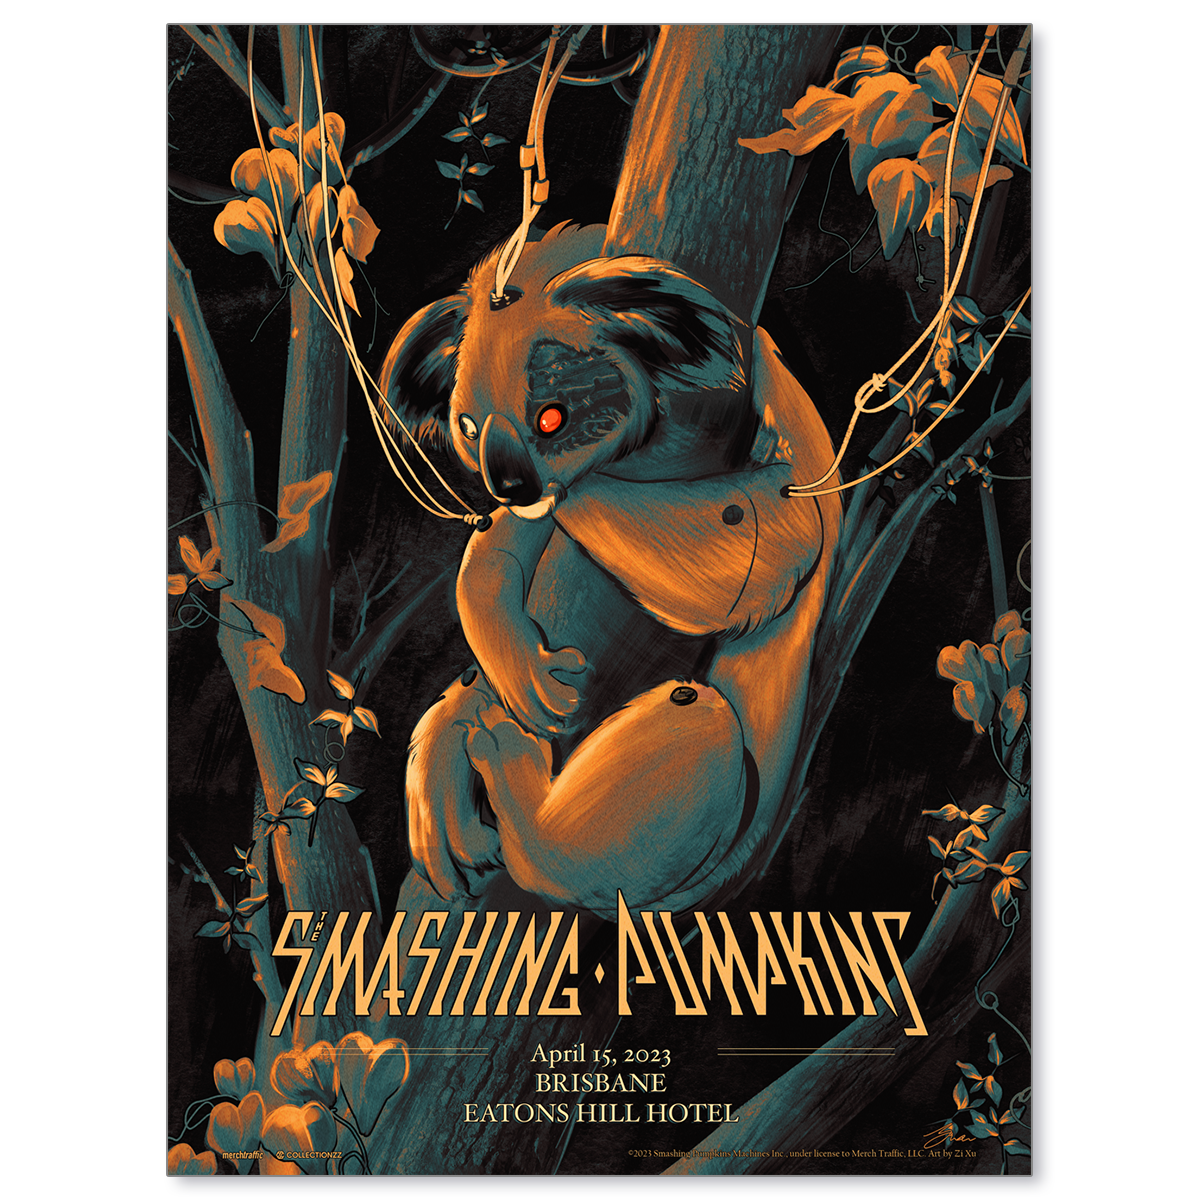 The Smashing Pumpkins Brisbane April 15, 2023